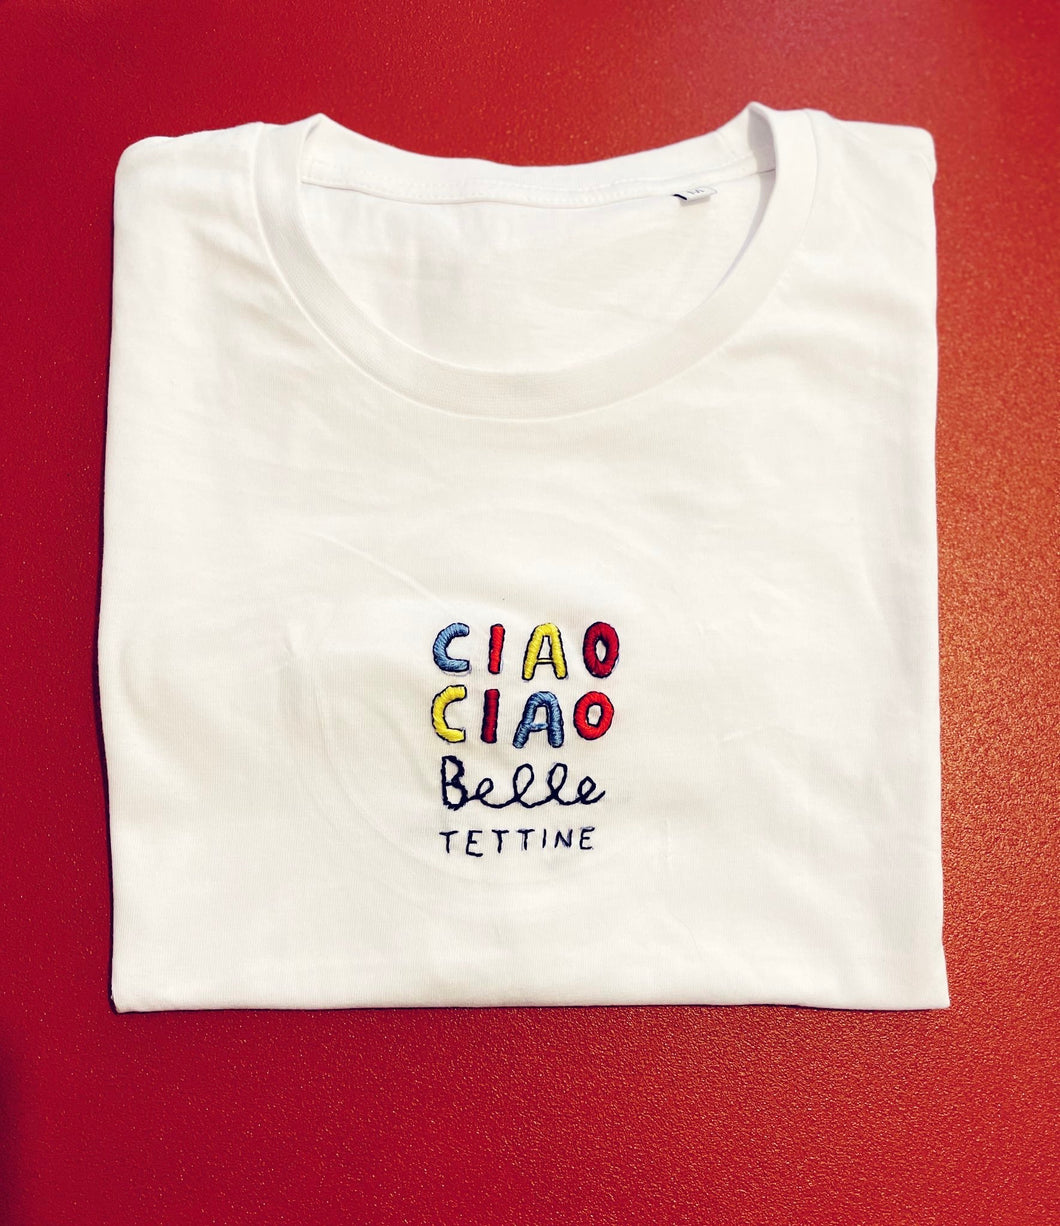 Ciao ciao belle tettine 👋🏻 _ la t-shirt